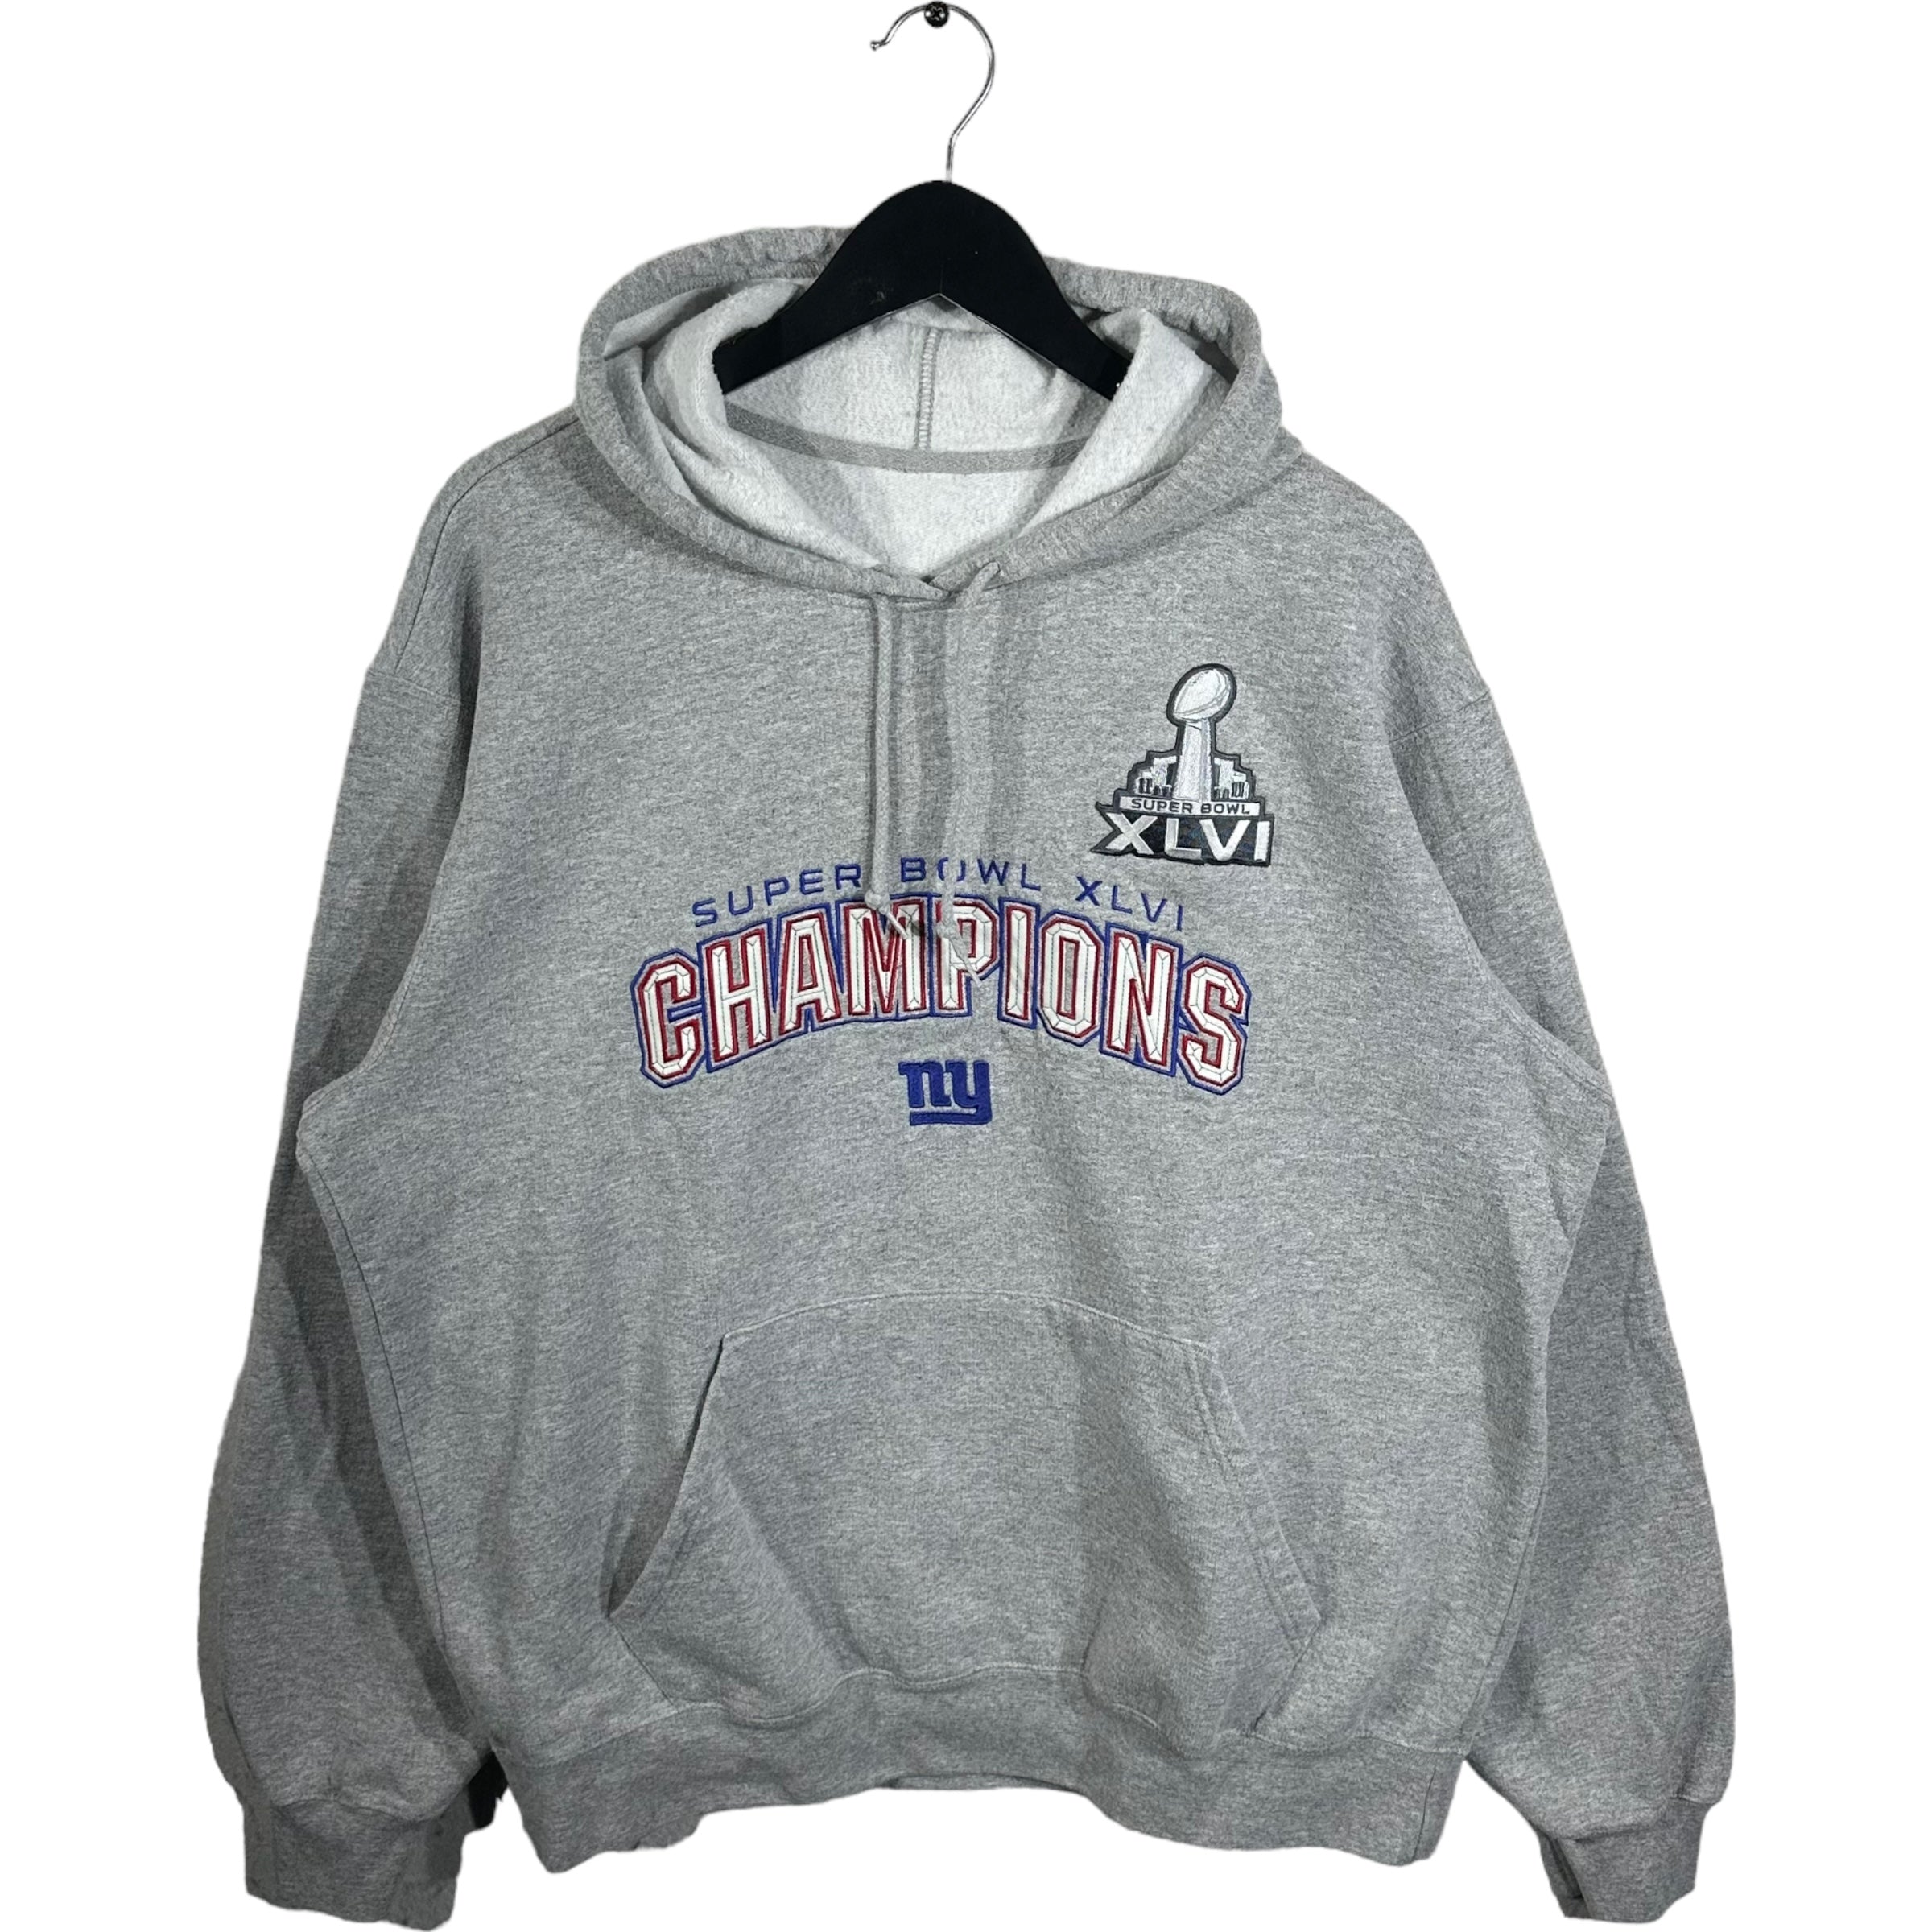 Vintage New York Giants Super Bowl Champions Hoodie